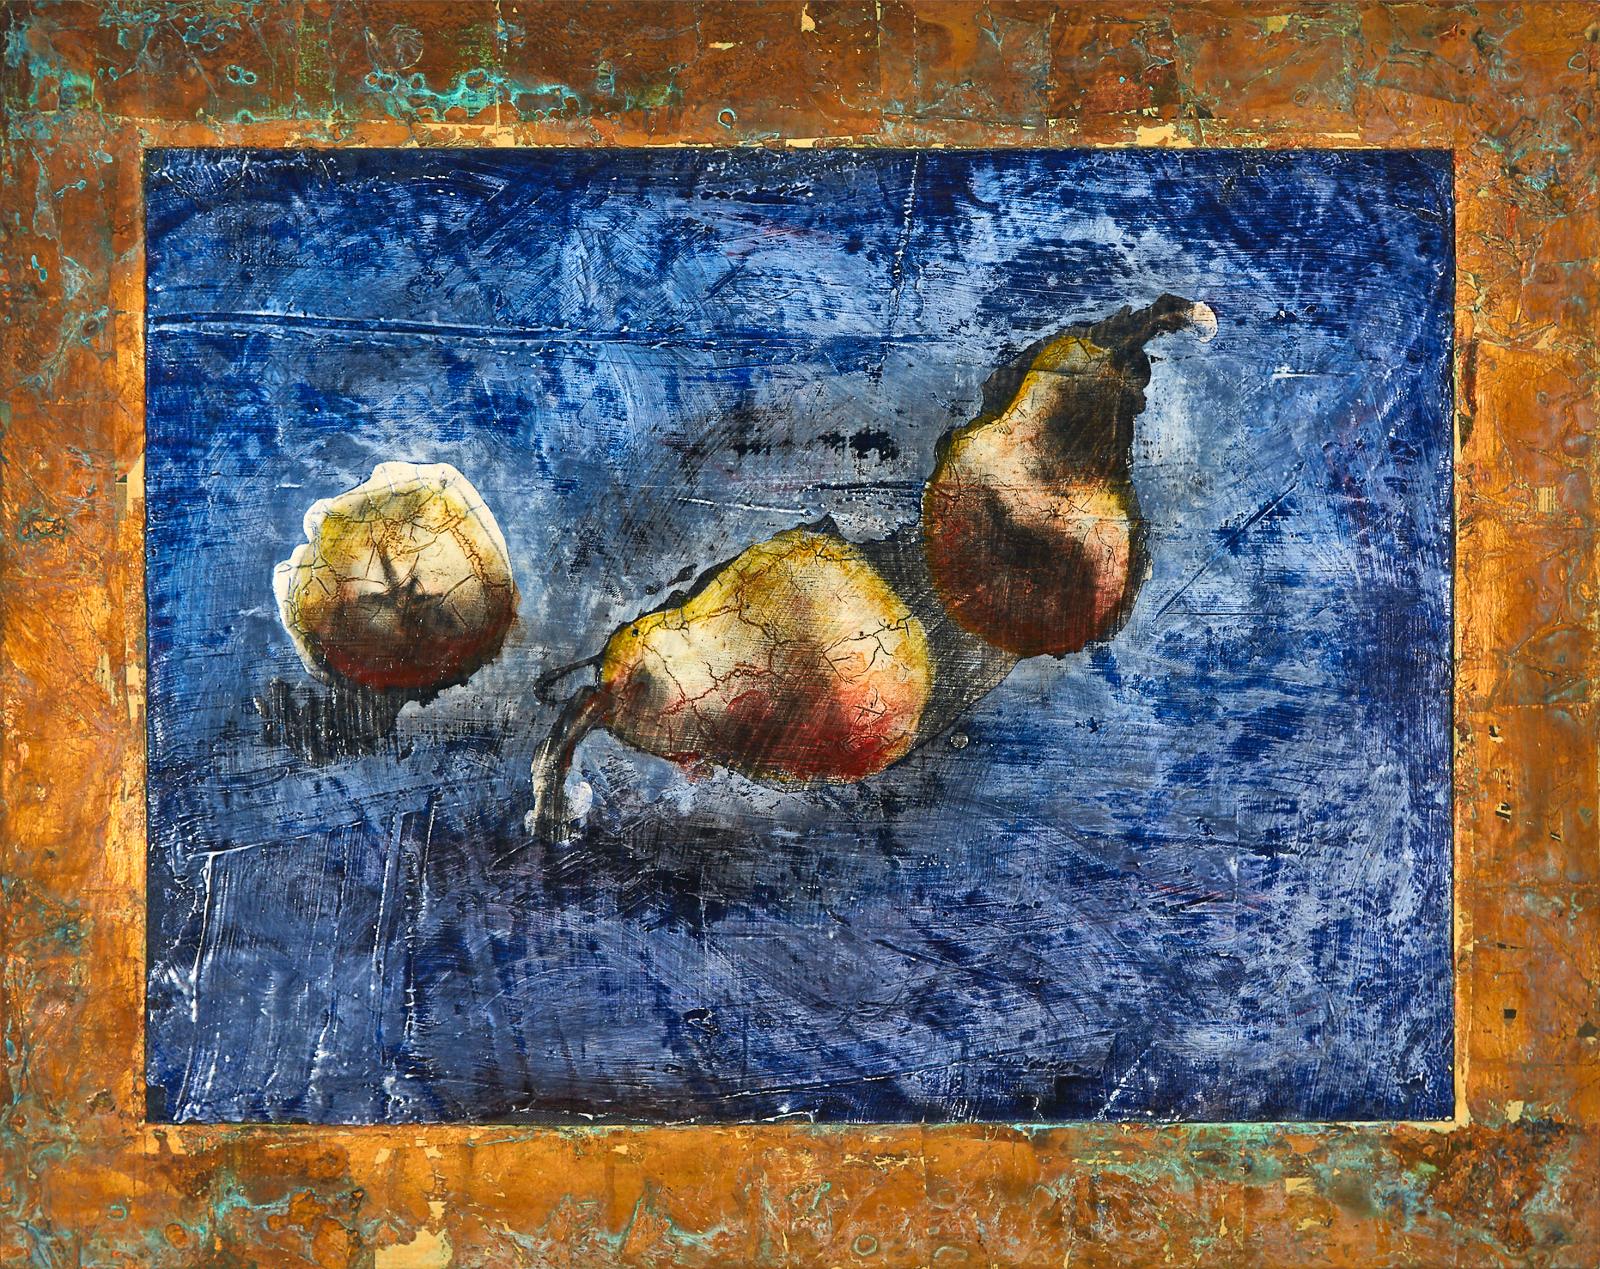 Mark Gaskin (1956) - Pears